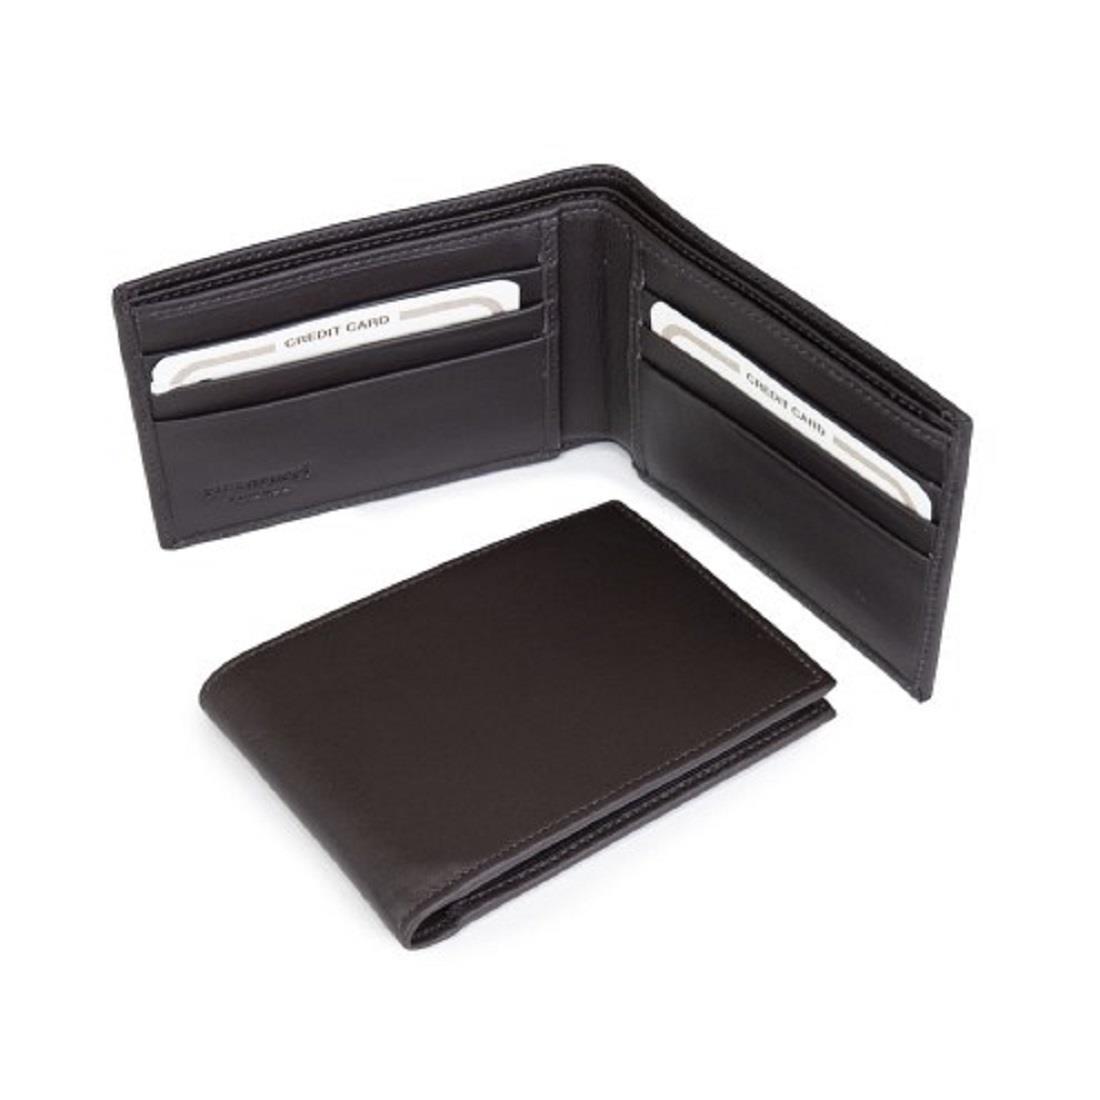 Brown leather wallet - PIEROTUCCI